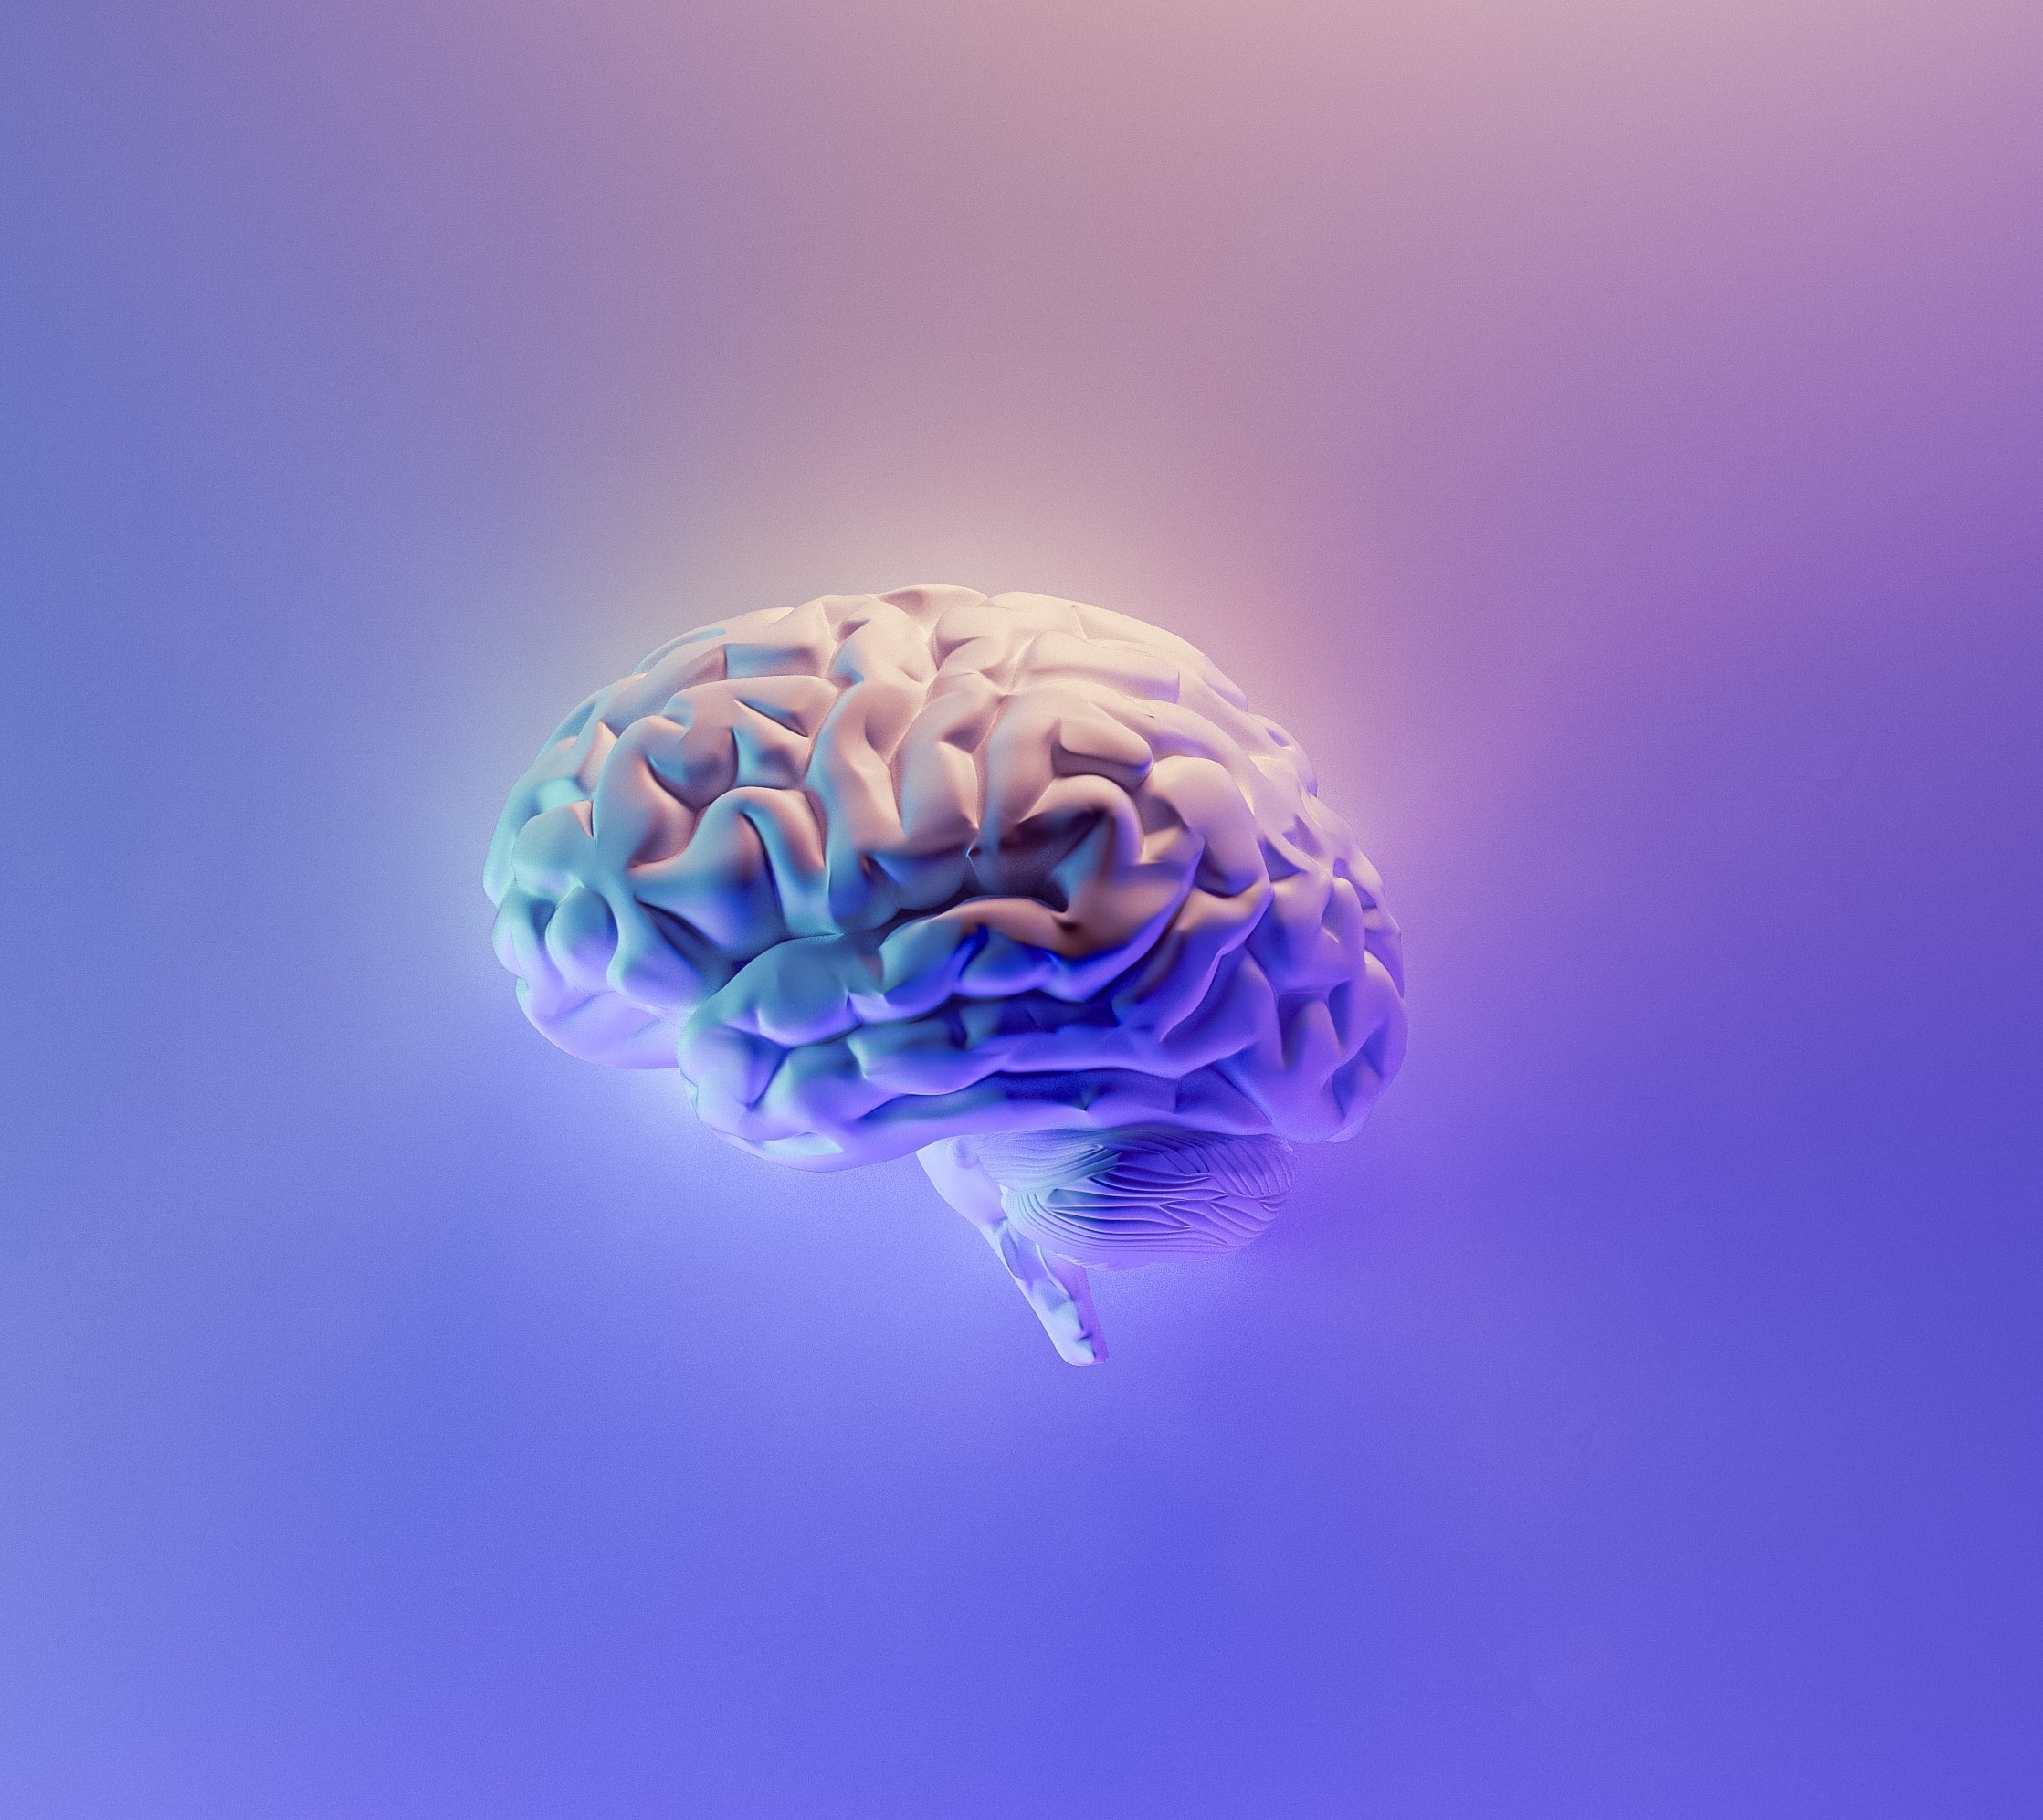 artist impression of a brain on blue background